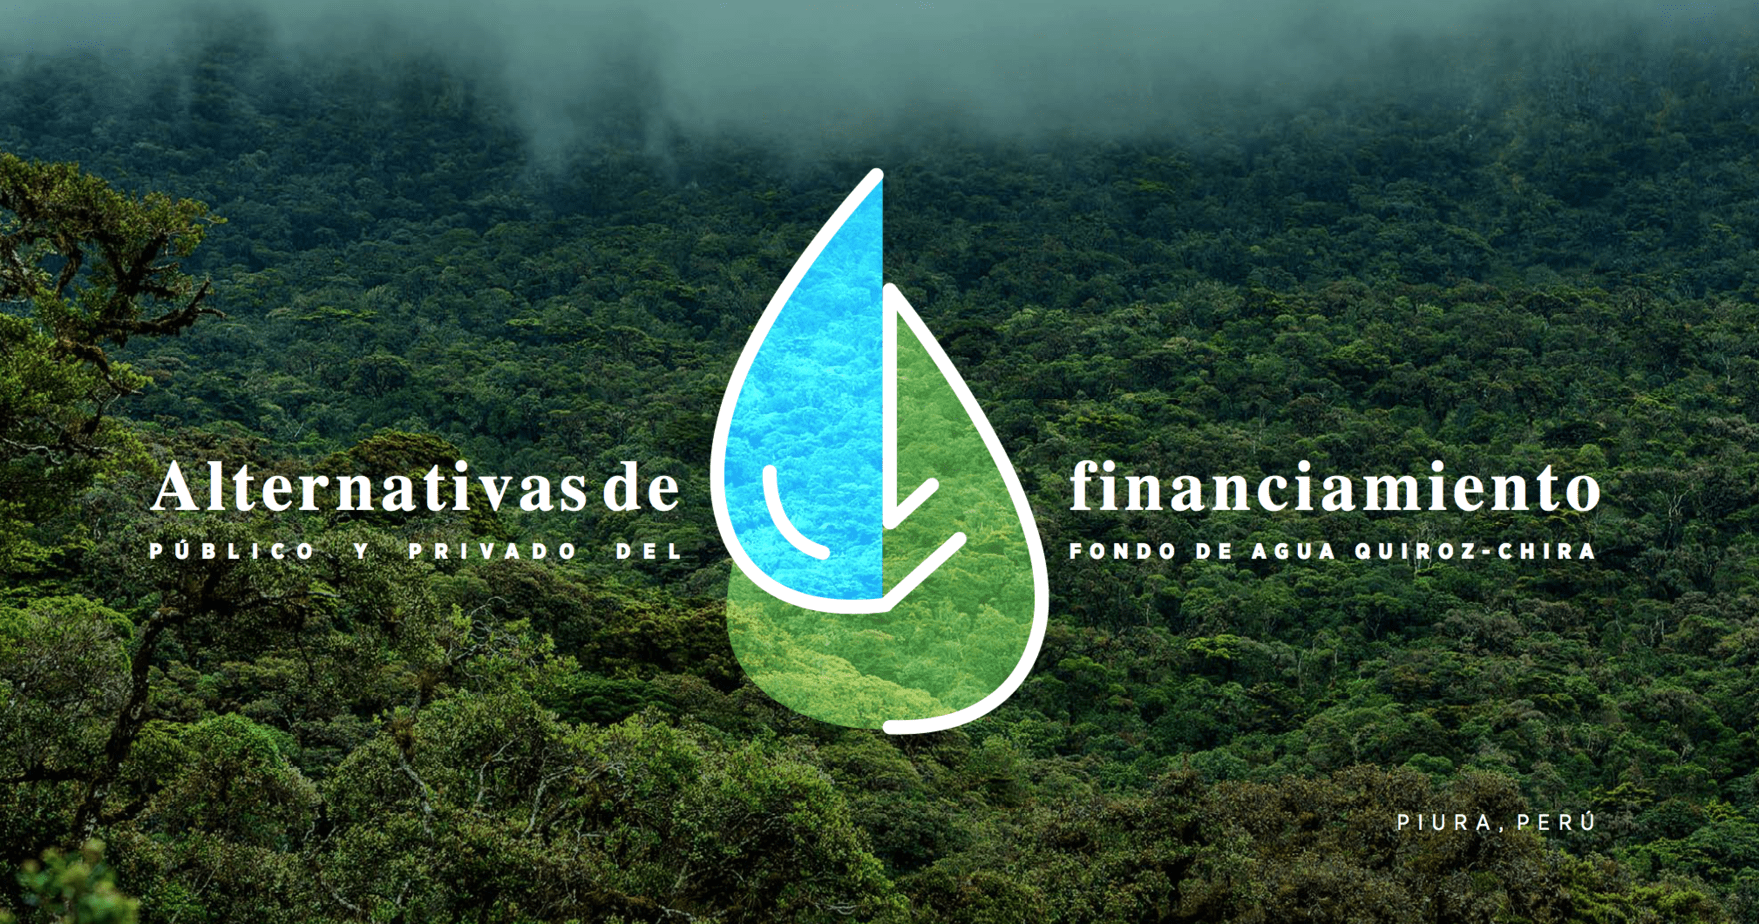 Alternativas de financiamiento Fondo de Agua Quiroz-Chira